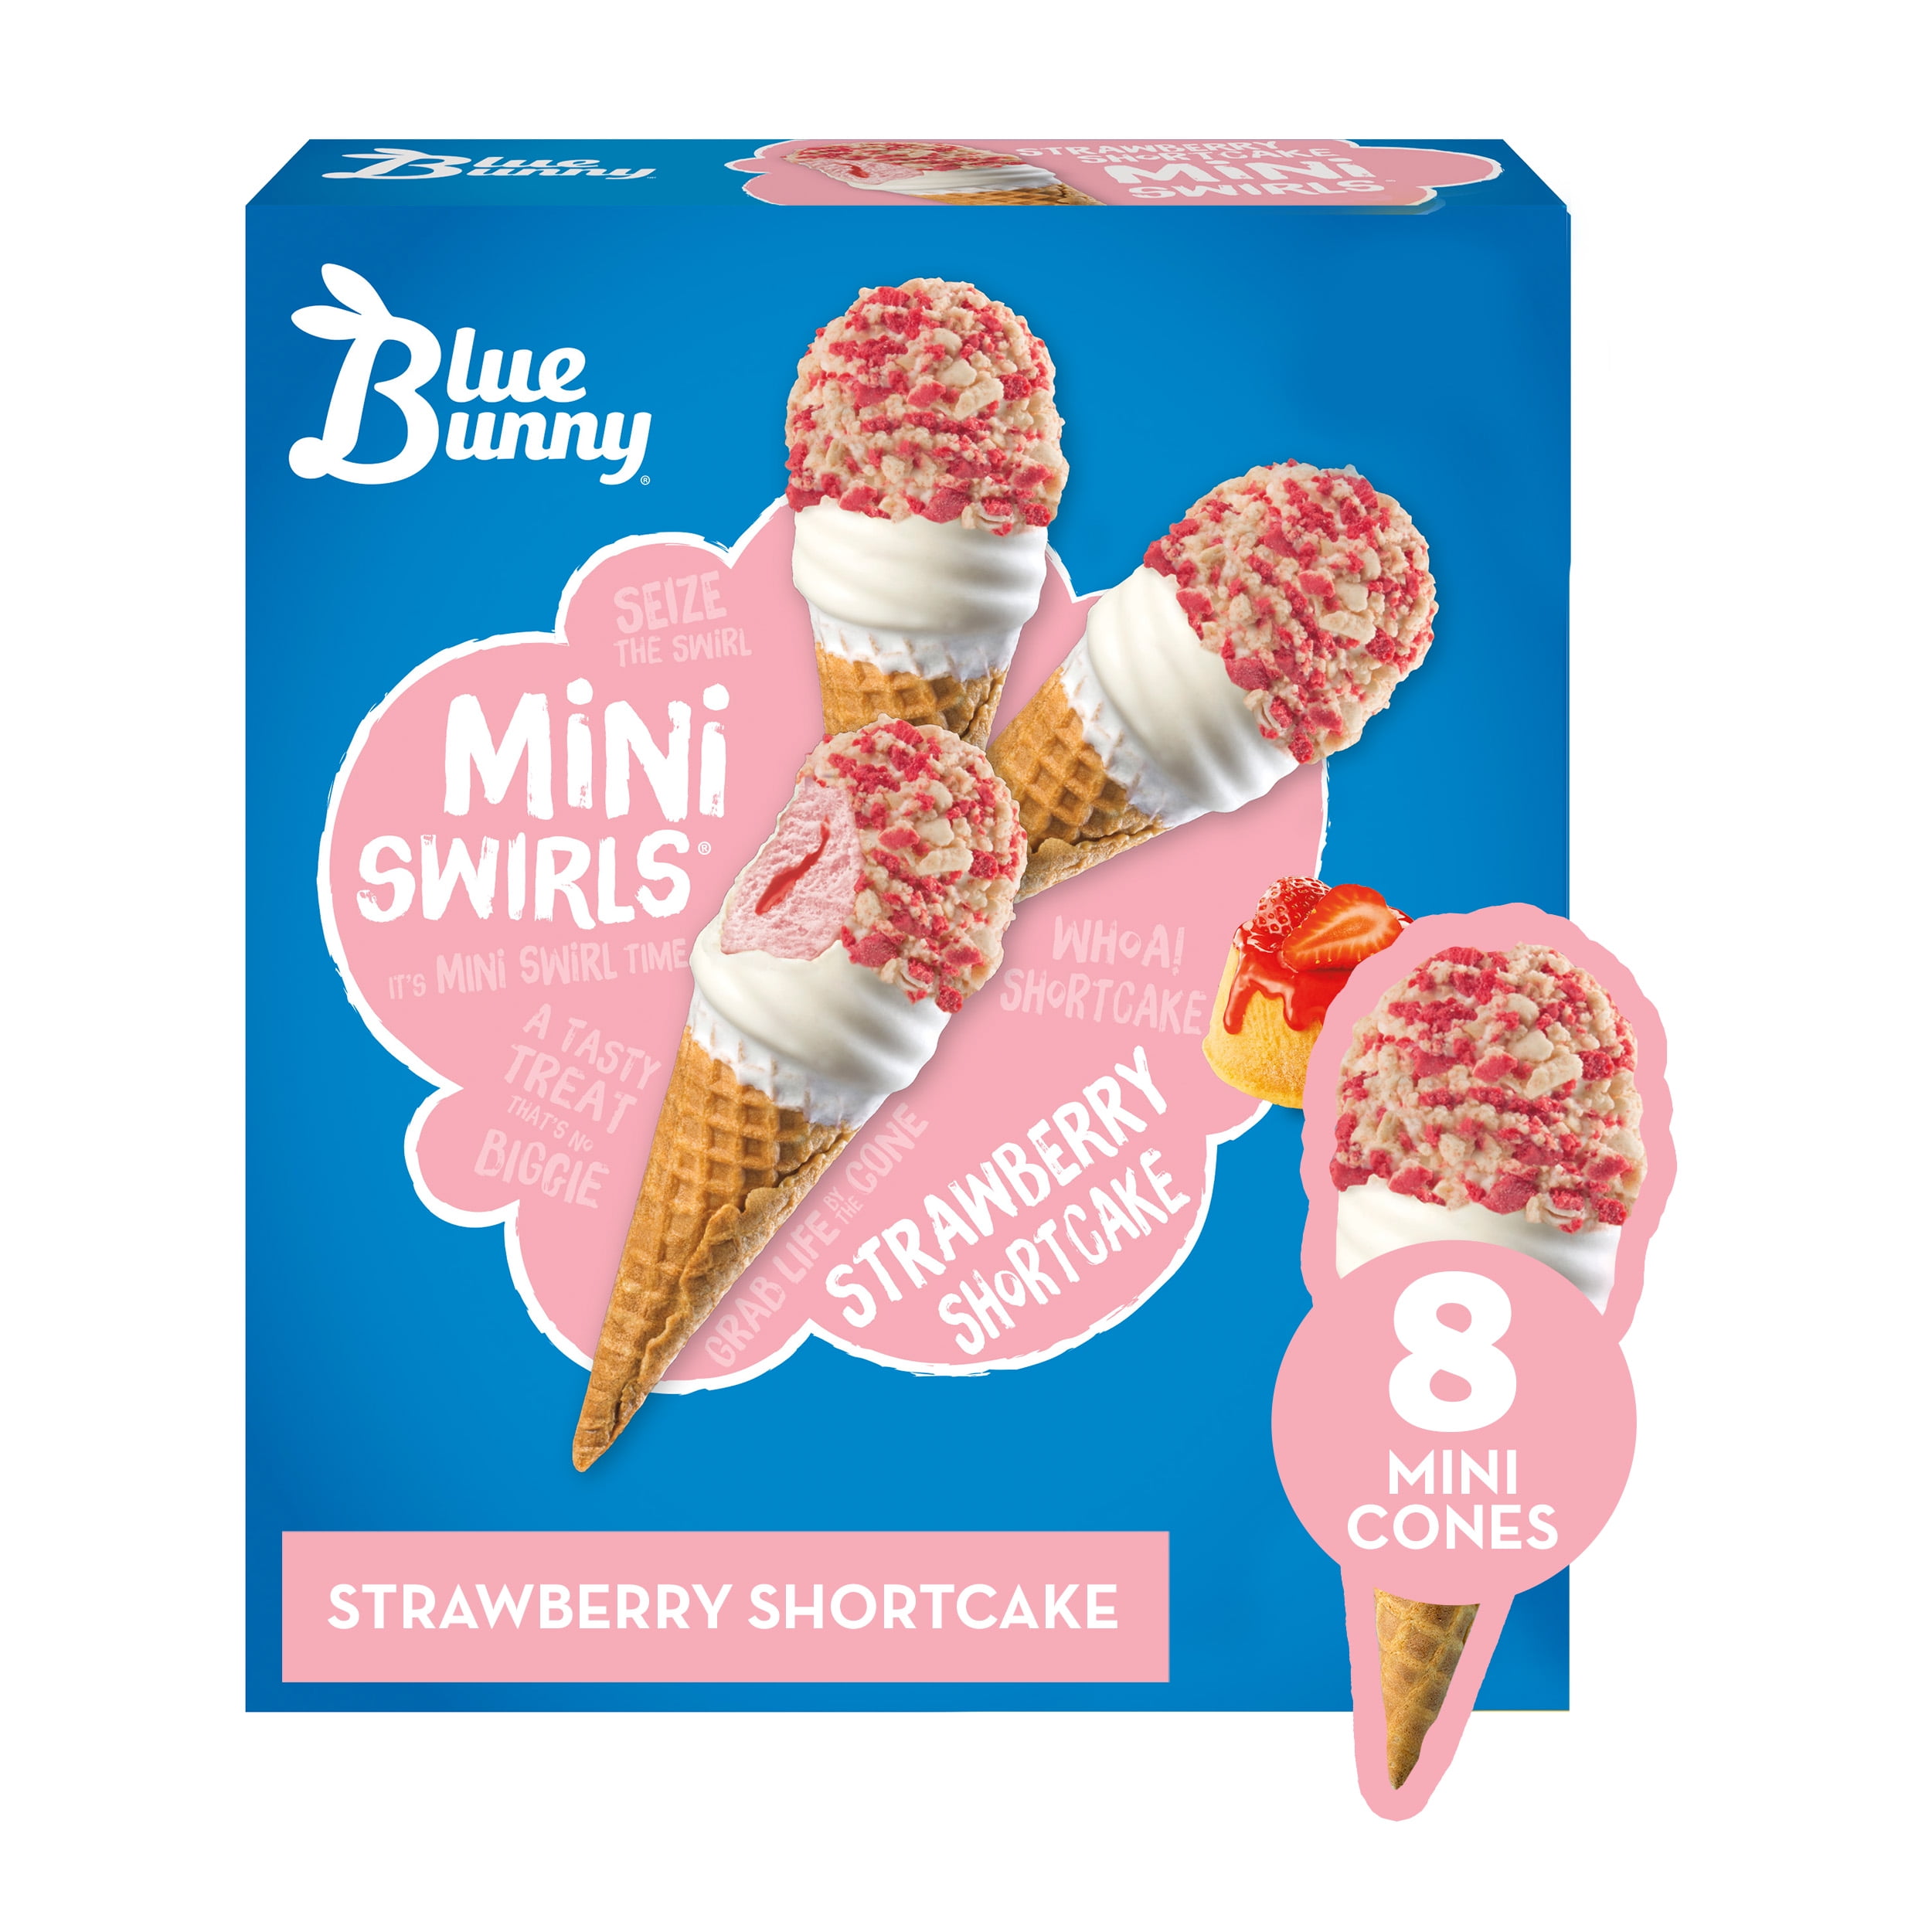 Blue Bunny Mini Swirls Strawberry Shortcake Cones, 8 Pack - Walmart.com